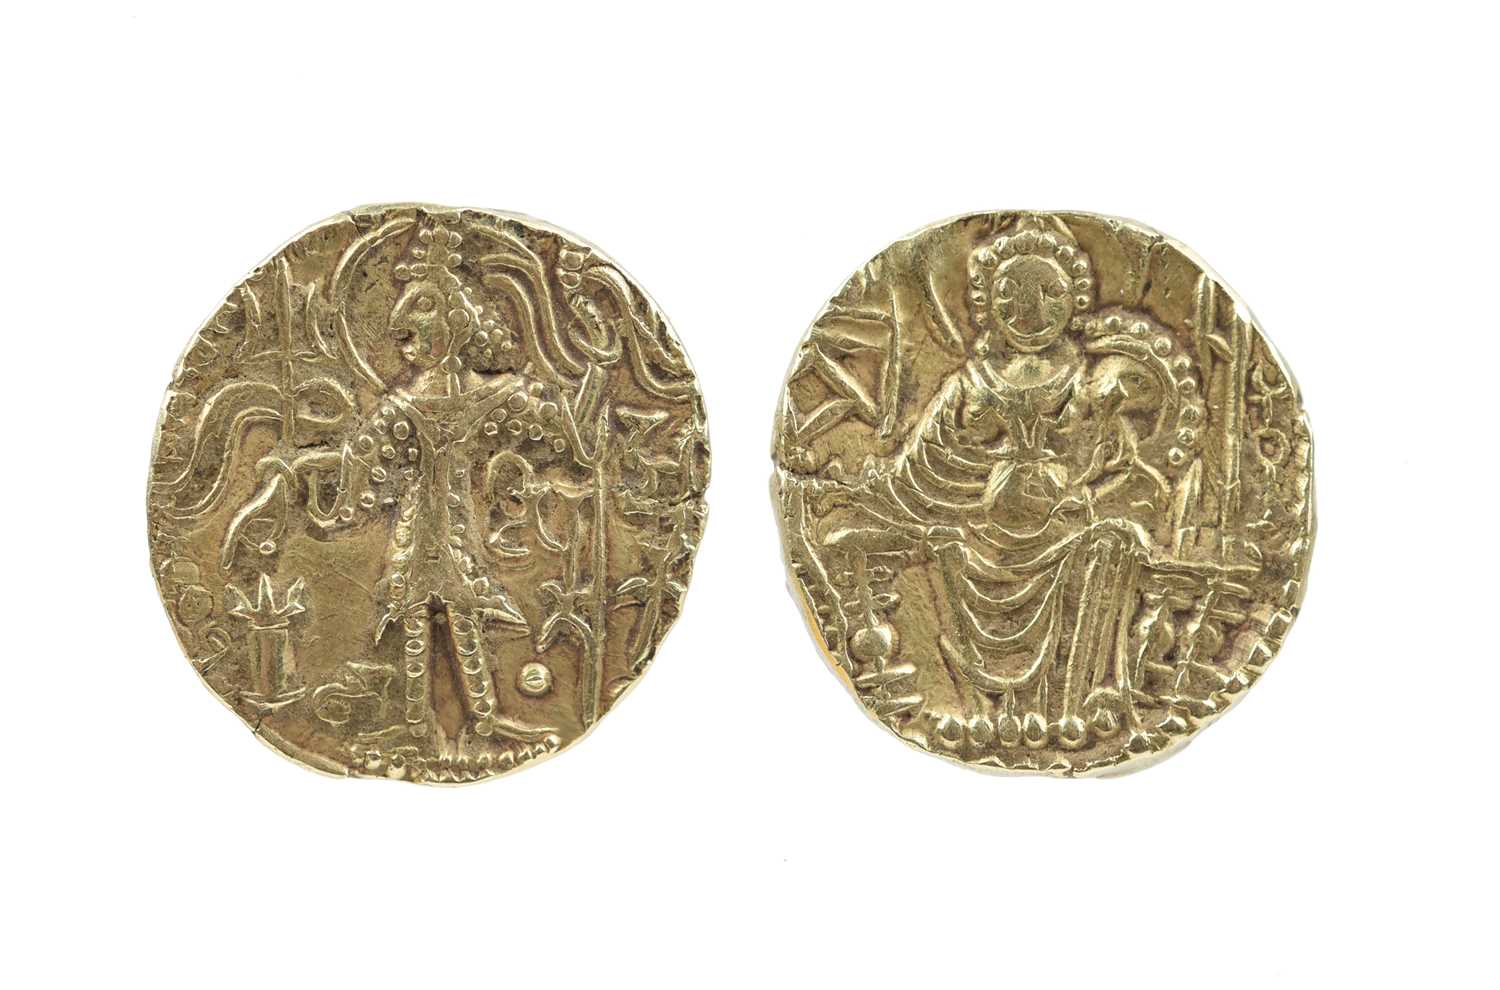 India - Kushan Empire: gold dinar, Shaka type (4th Century AD), king standing holding cornucopia and